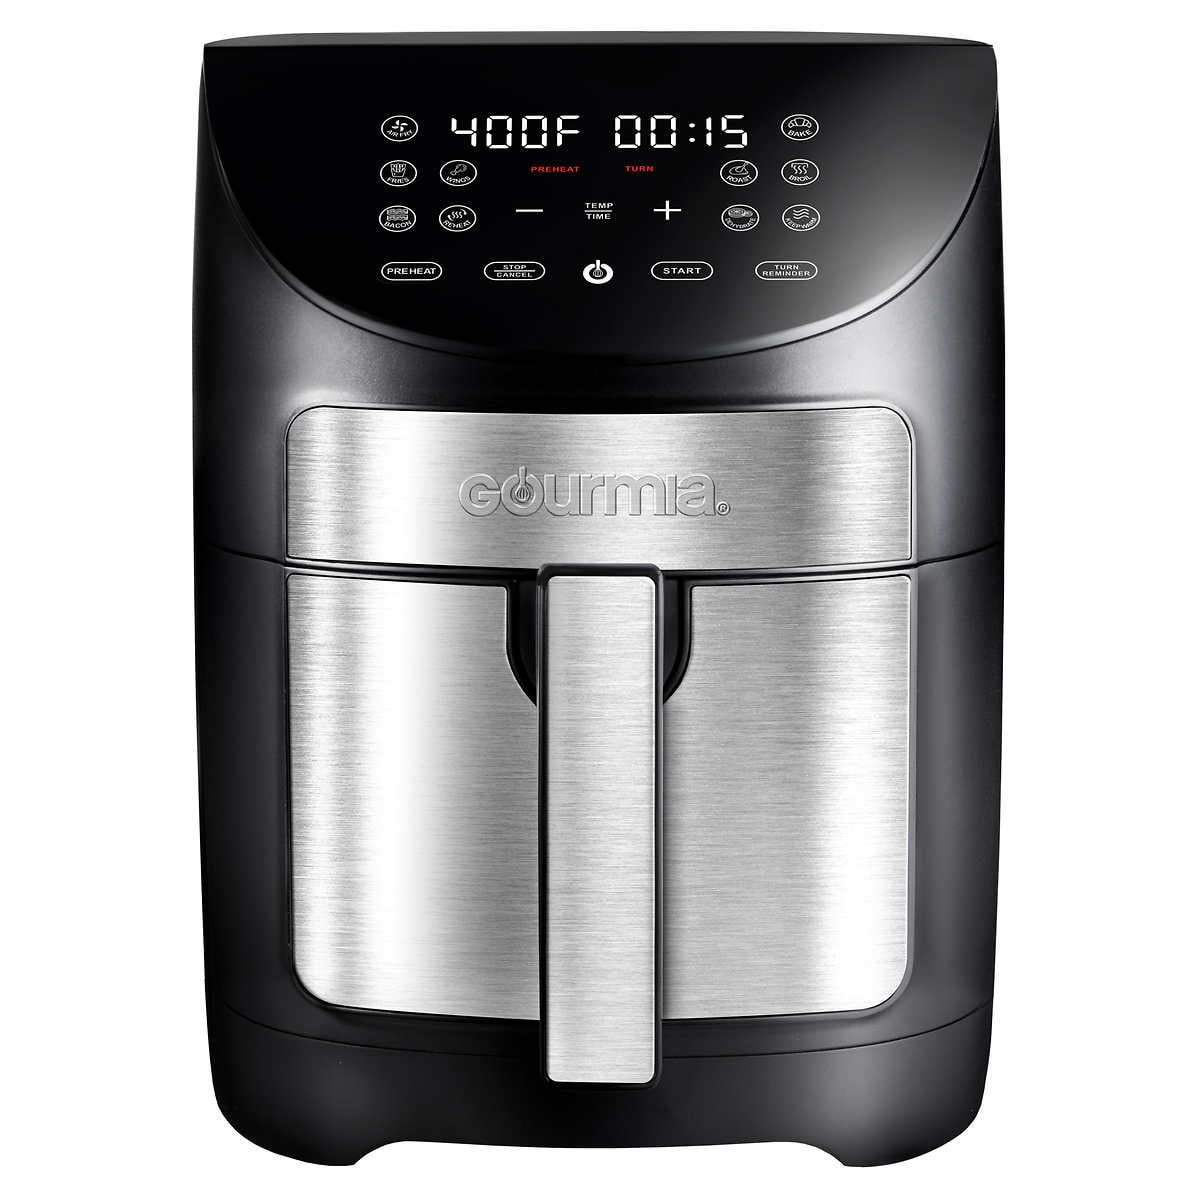 New Gourmia 7-Quart Digital Air Fryer 10 One-Touch Cooking